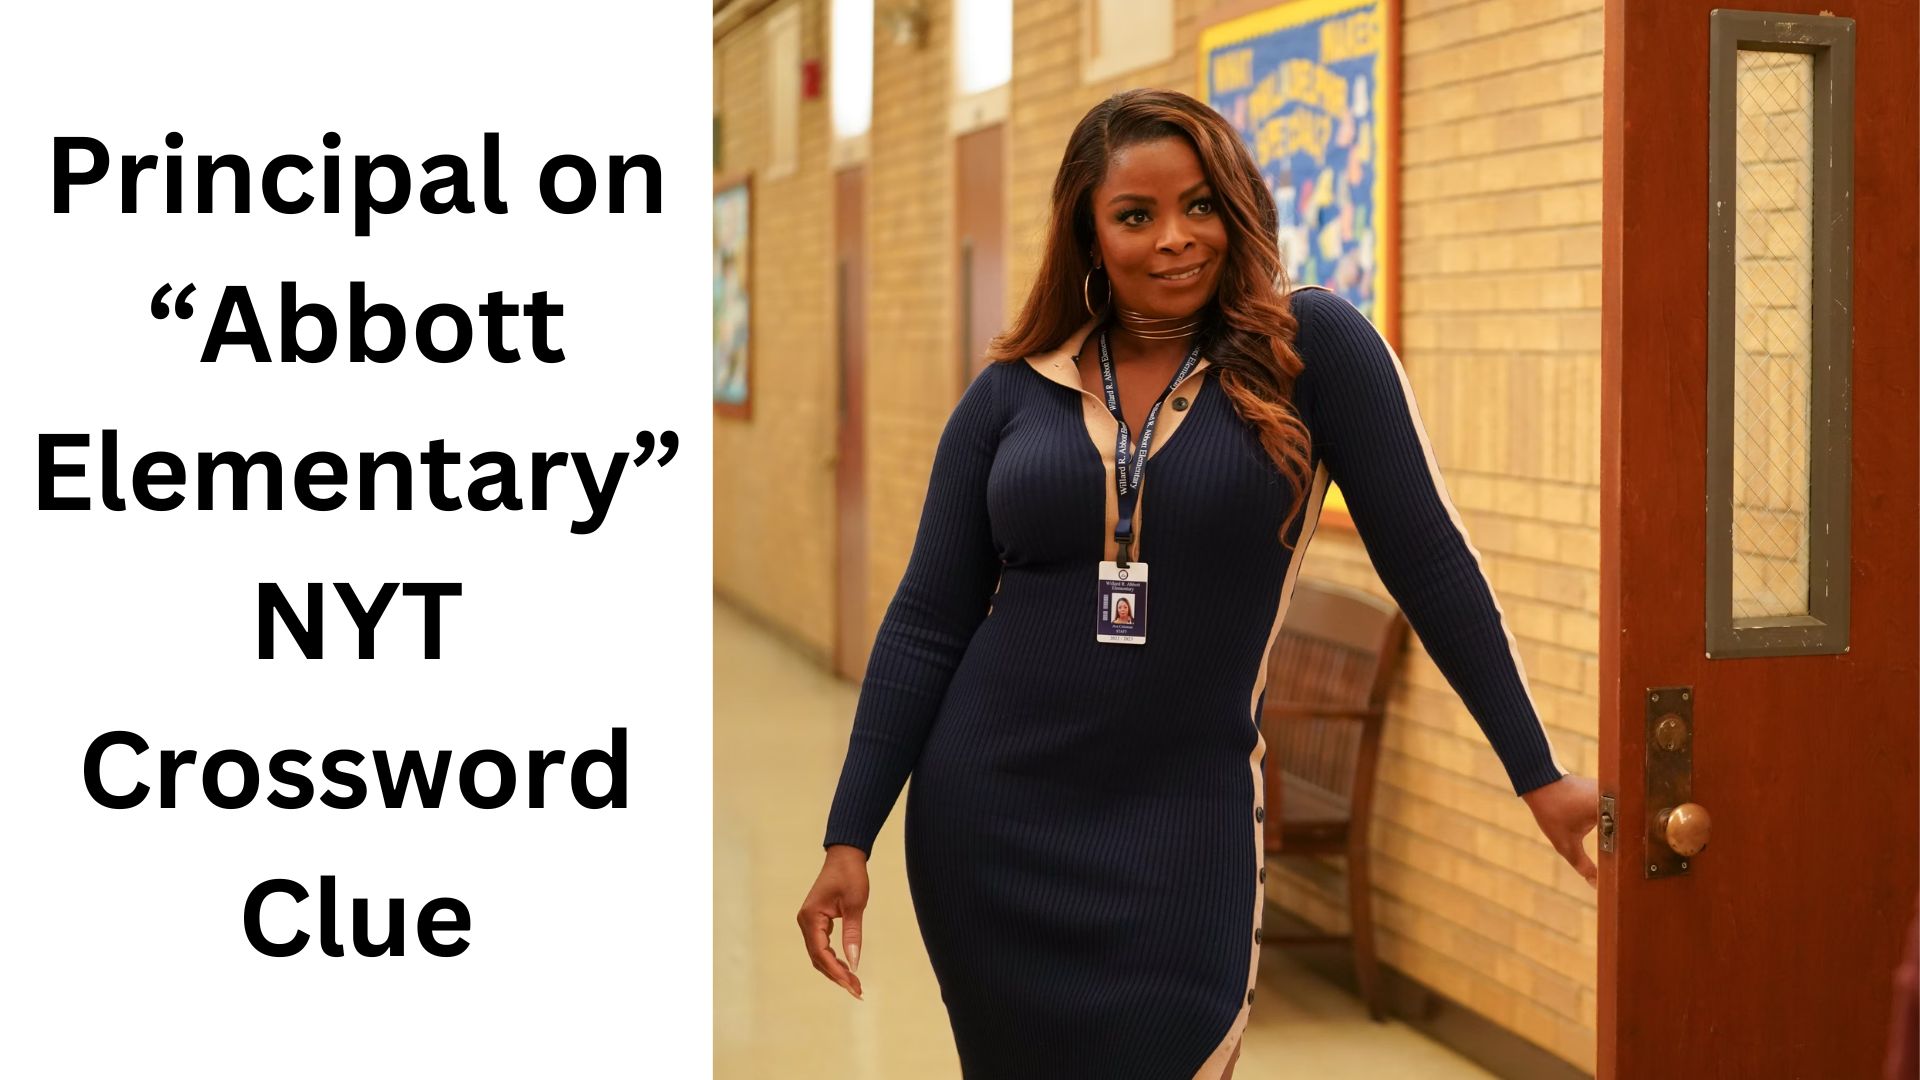 Principal on "Abbott Elementary" NYT Crossword Clue